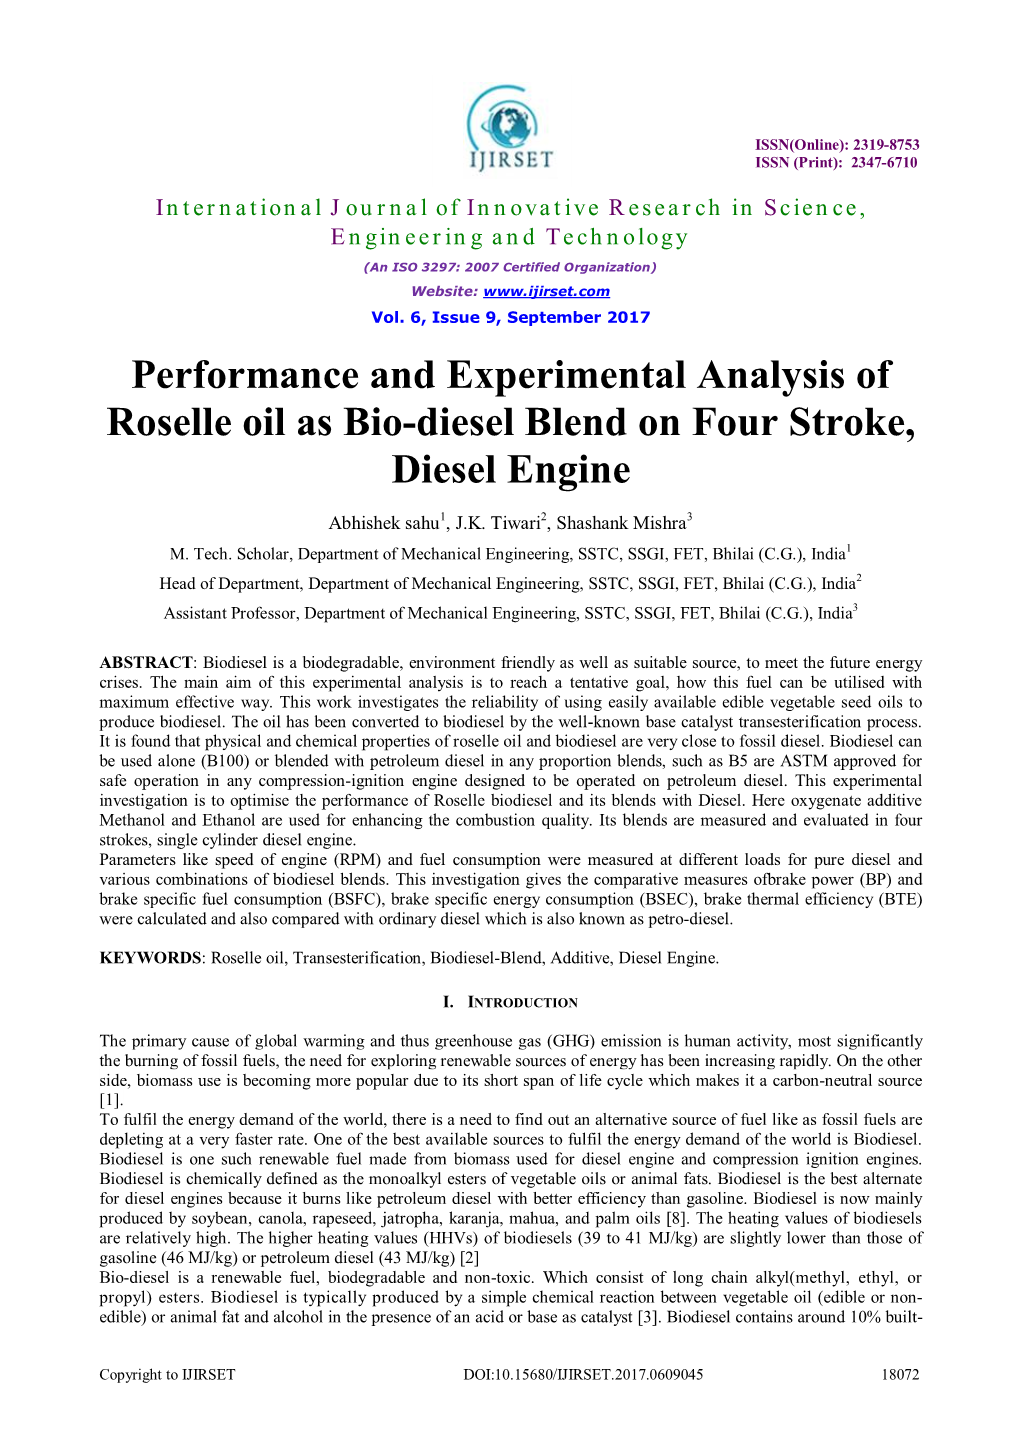 Performance and Experimental Analysis of Roselle Oil As Bio-Diesel Blend on Four Stroke, Diesel Engine